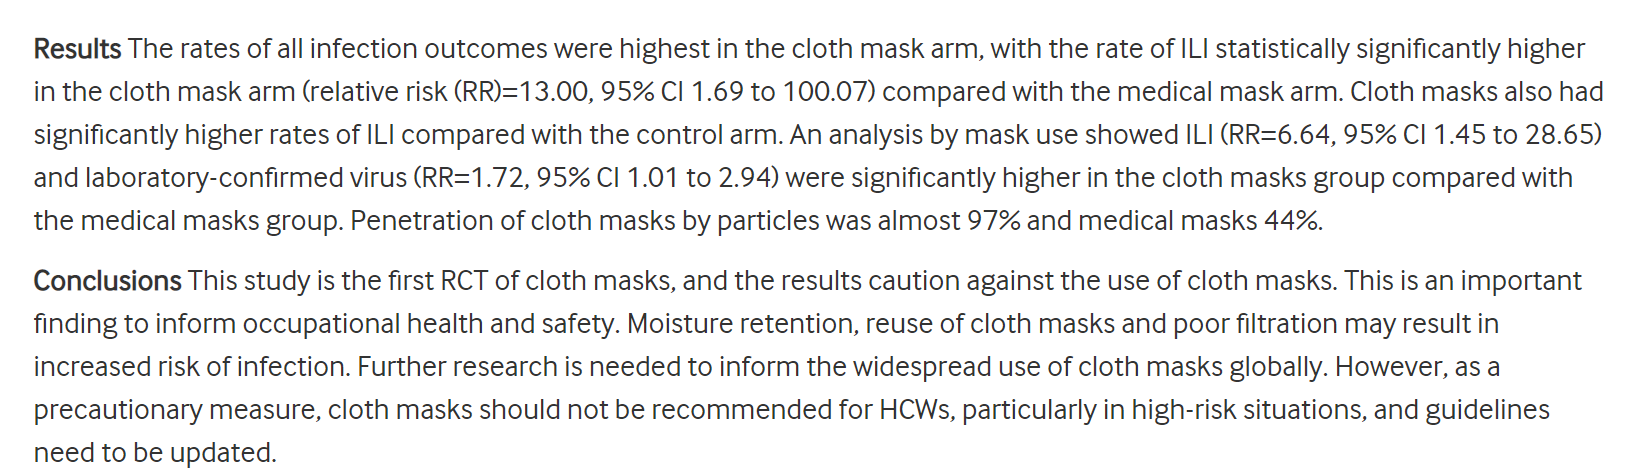 cloth masks hurt